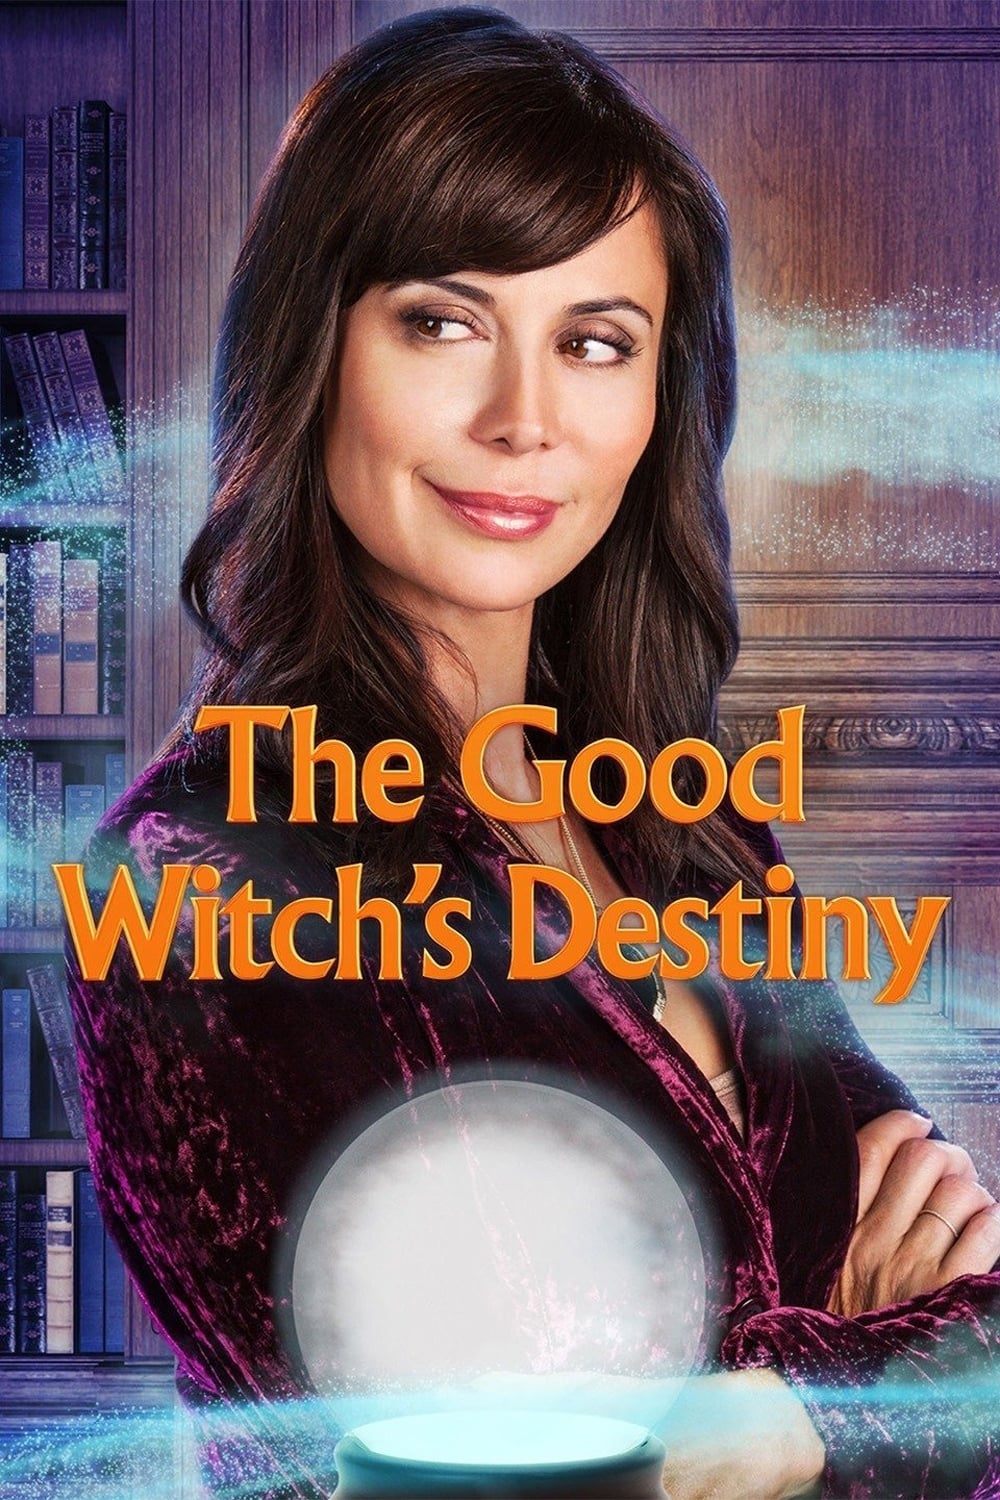 The Good Witch's Destiny (2013)